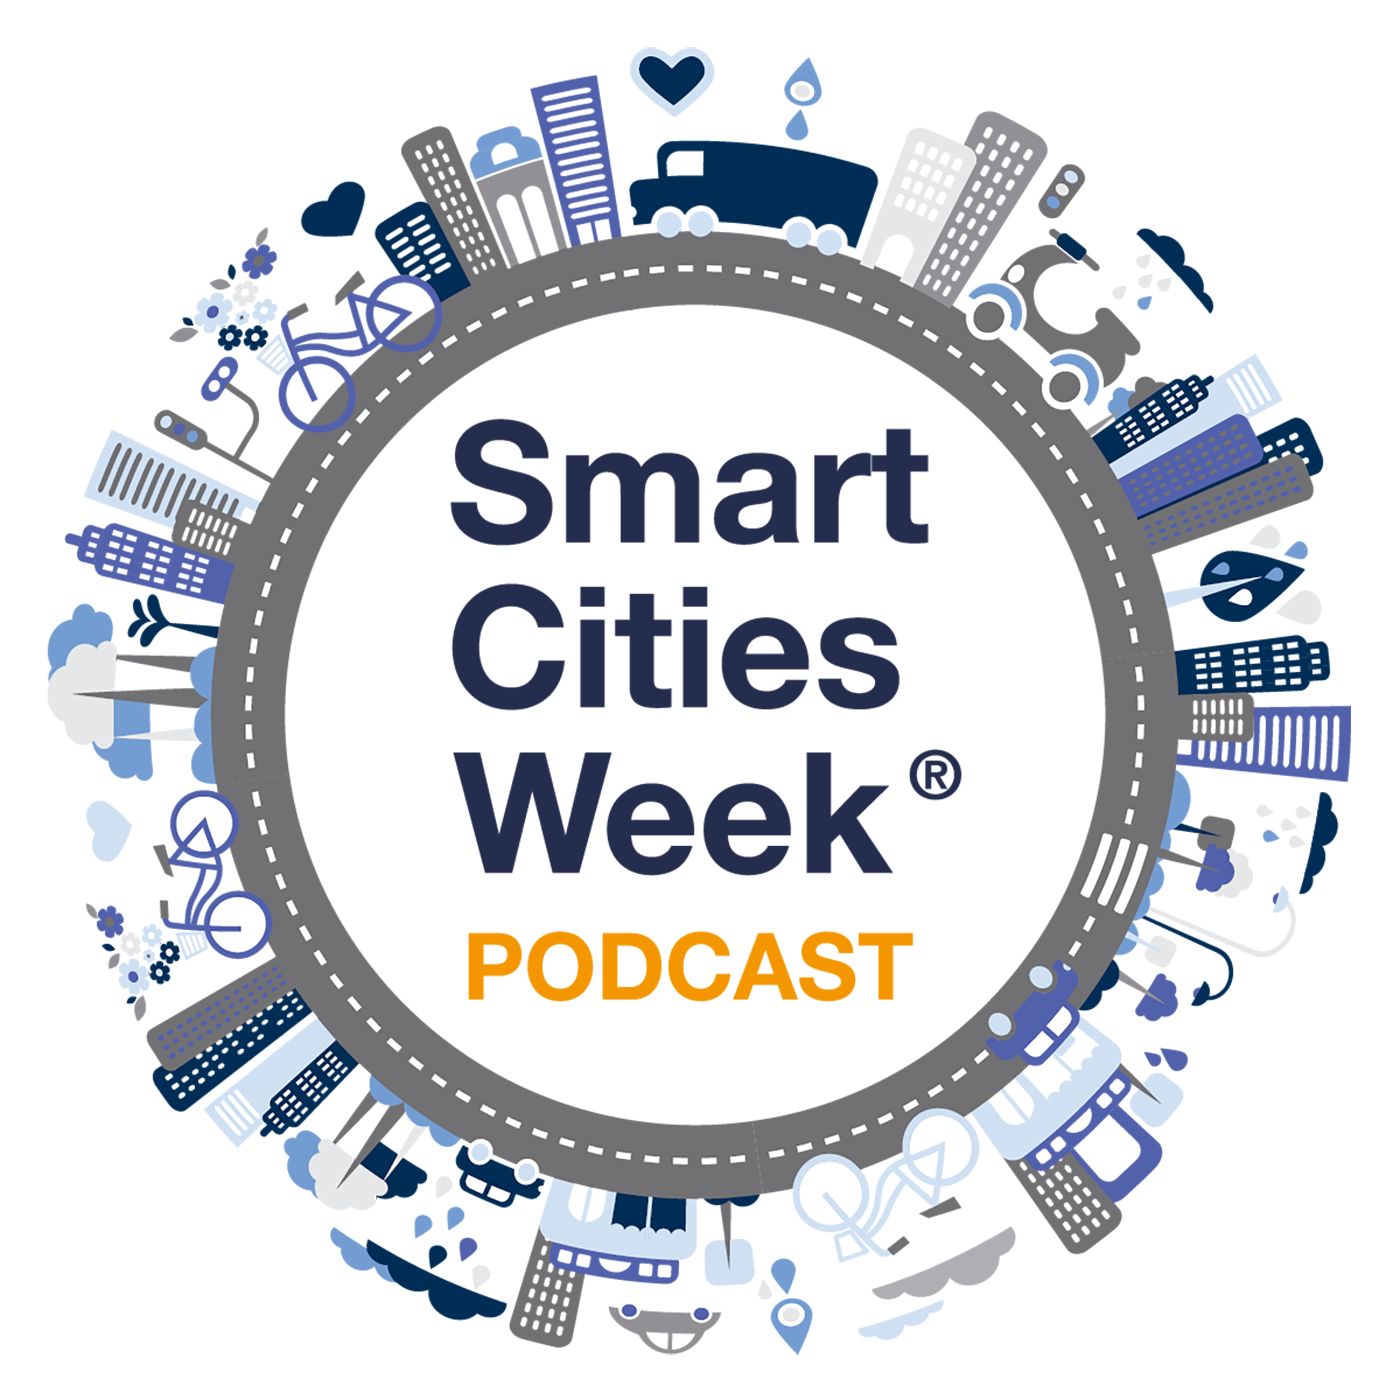 Smart Cities Week Podcast